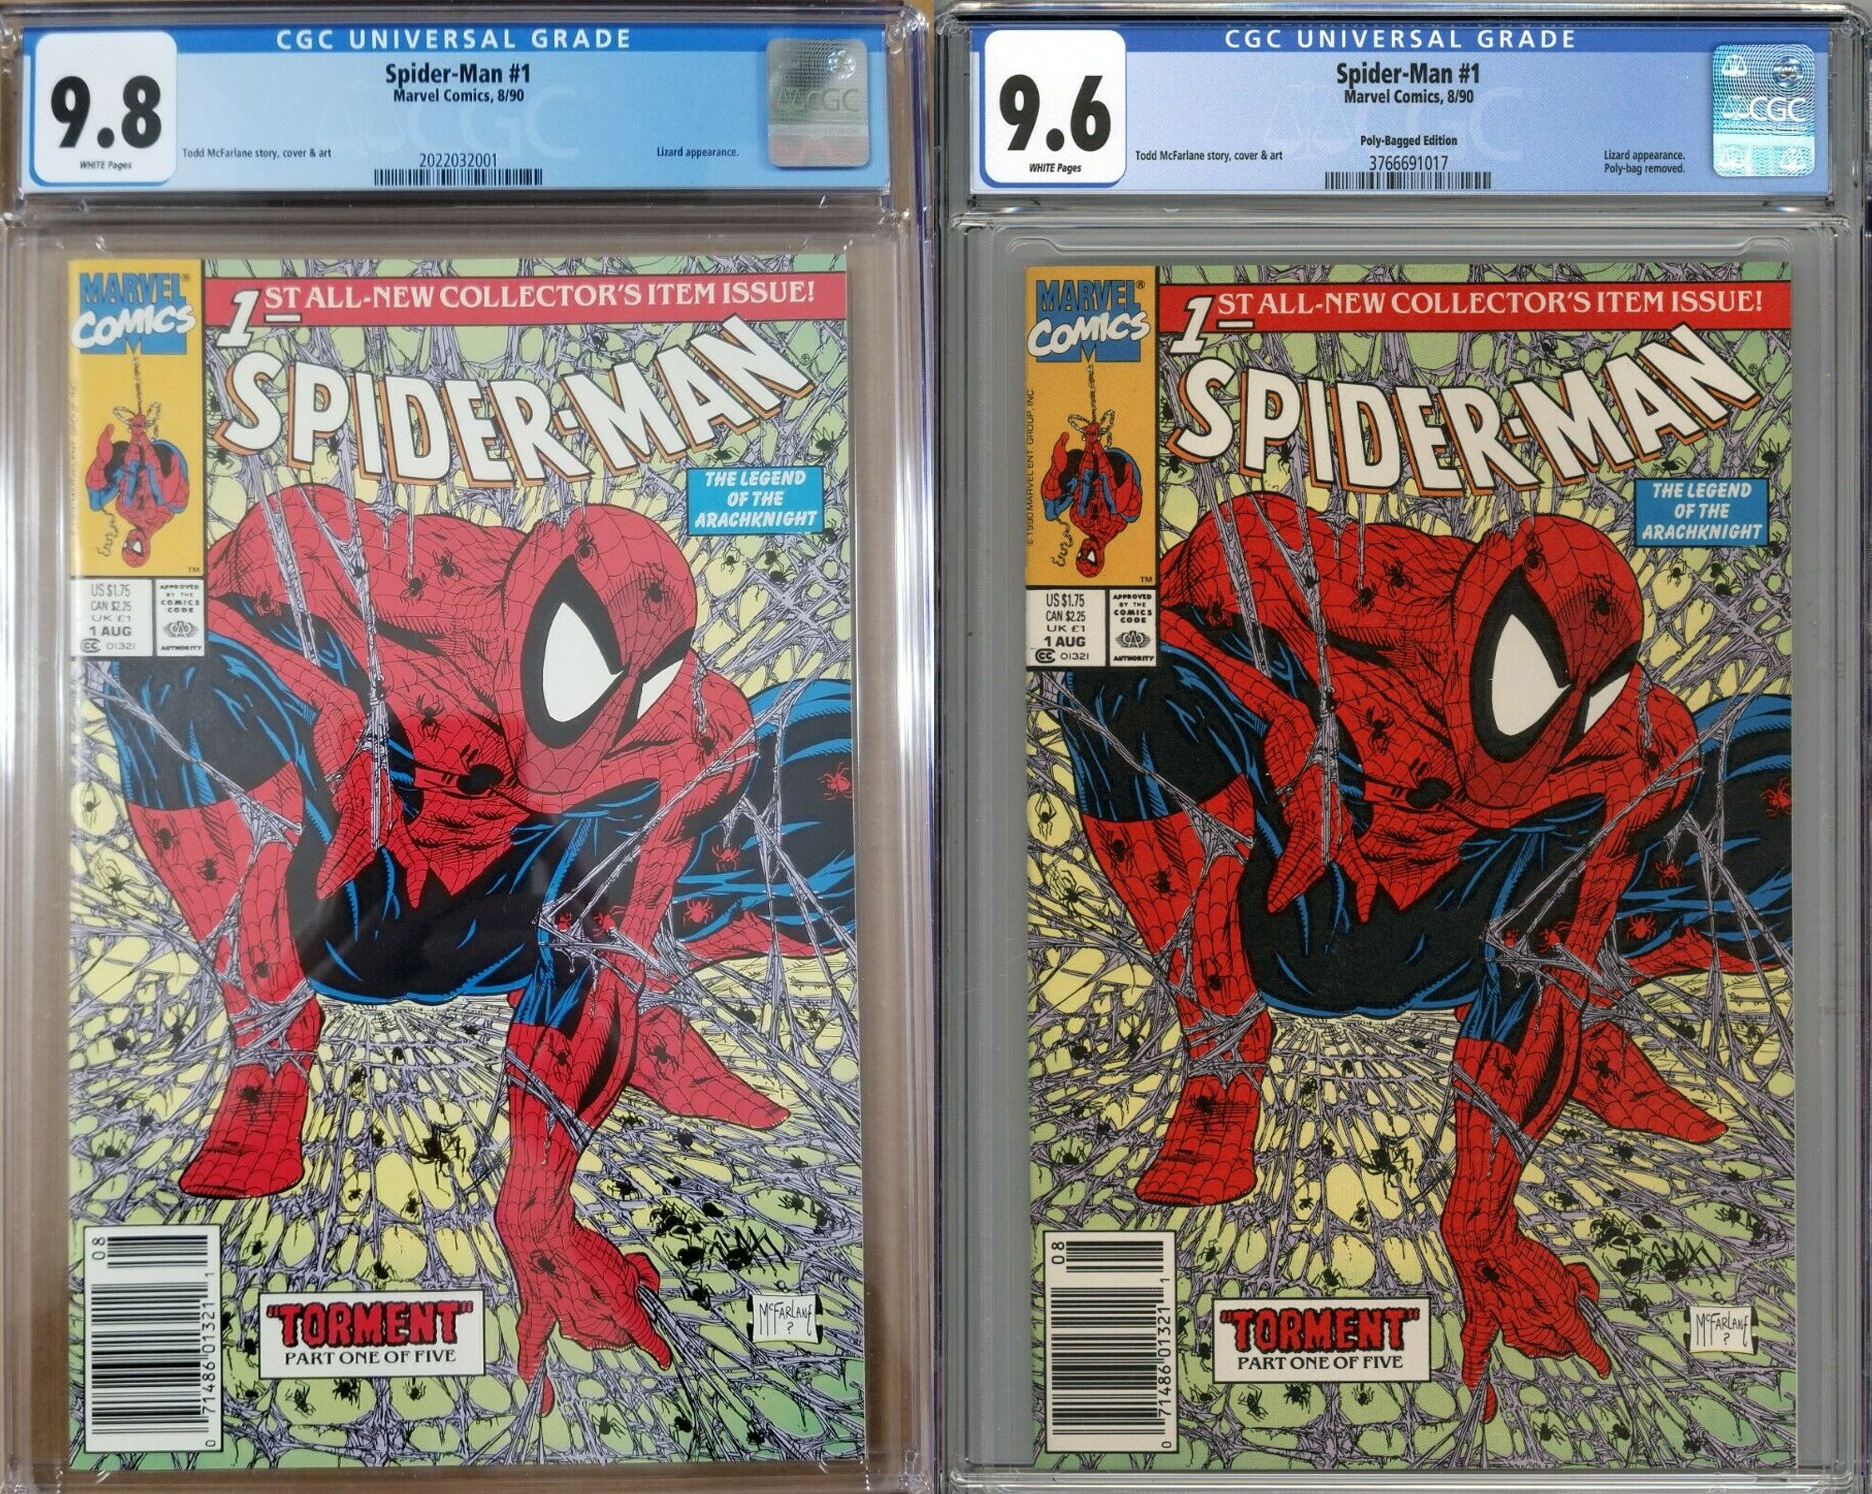 Comics newsstand vs direct edition